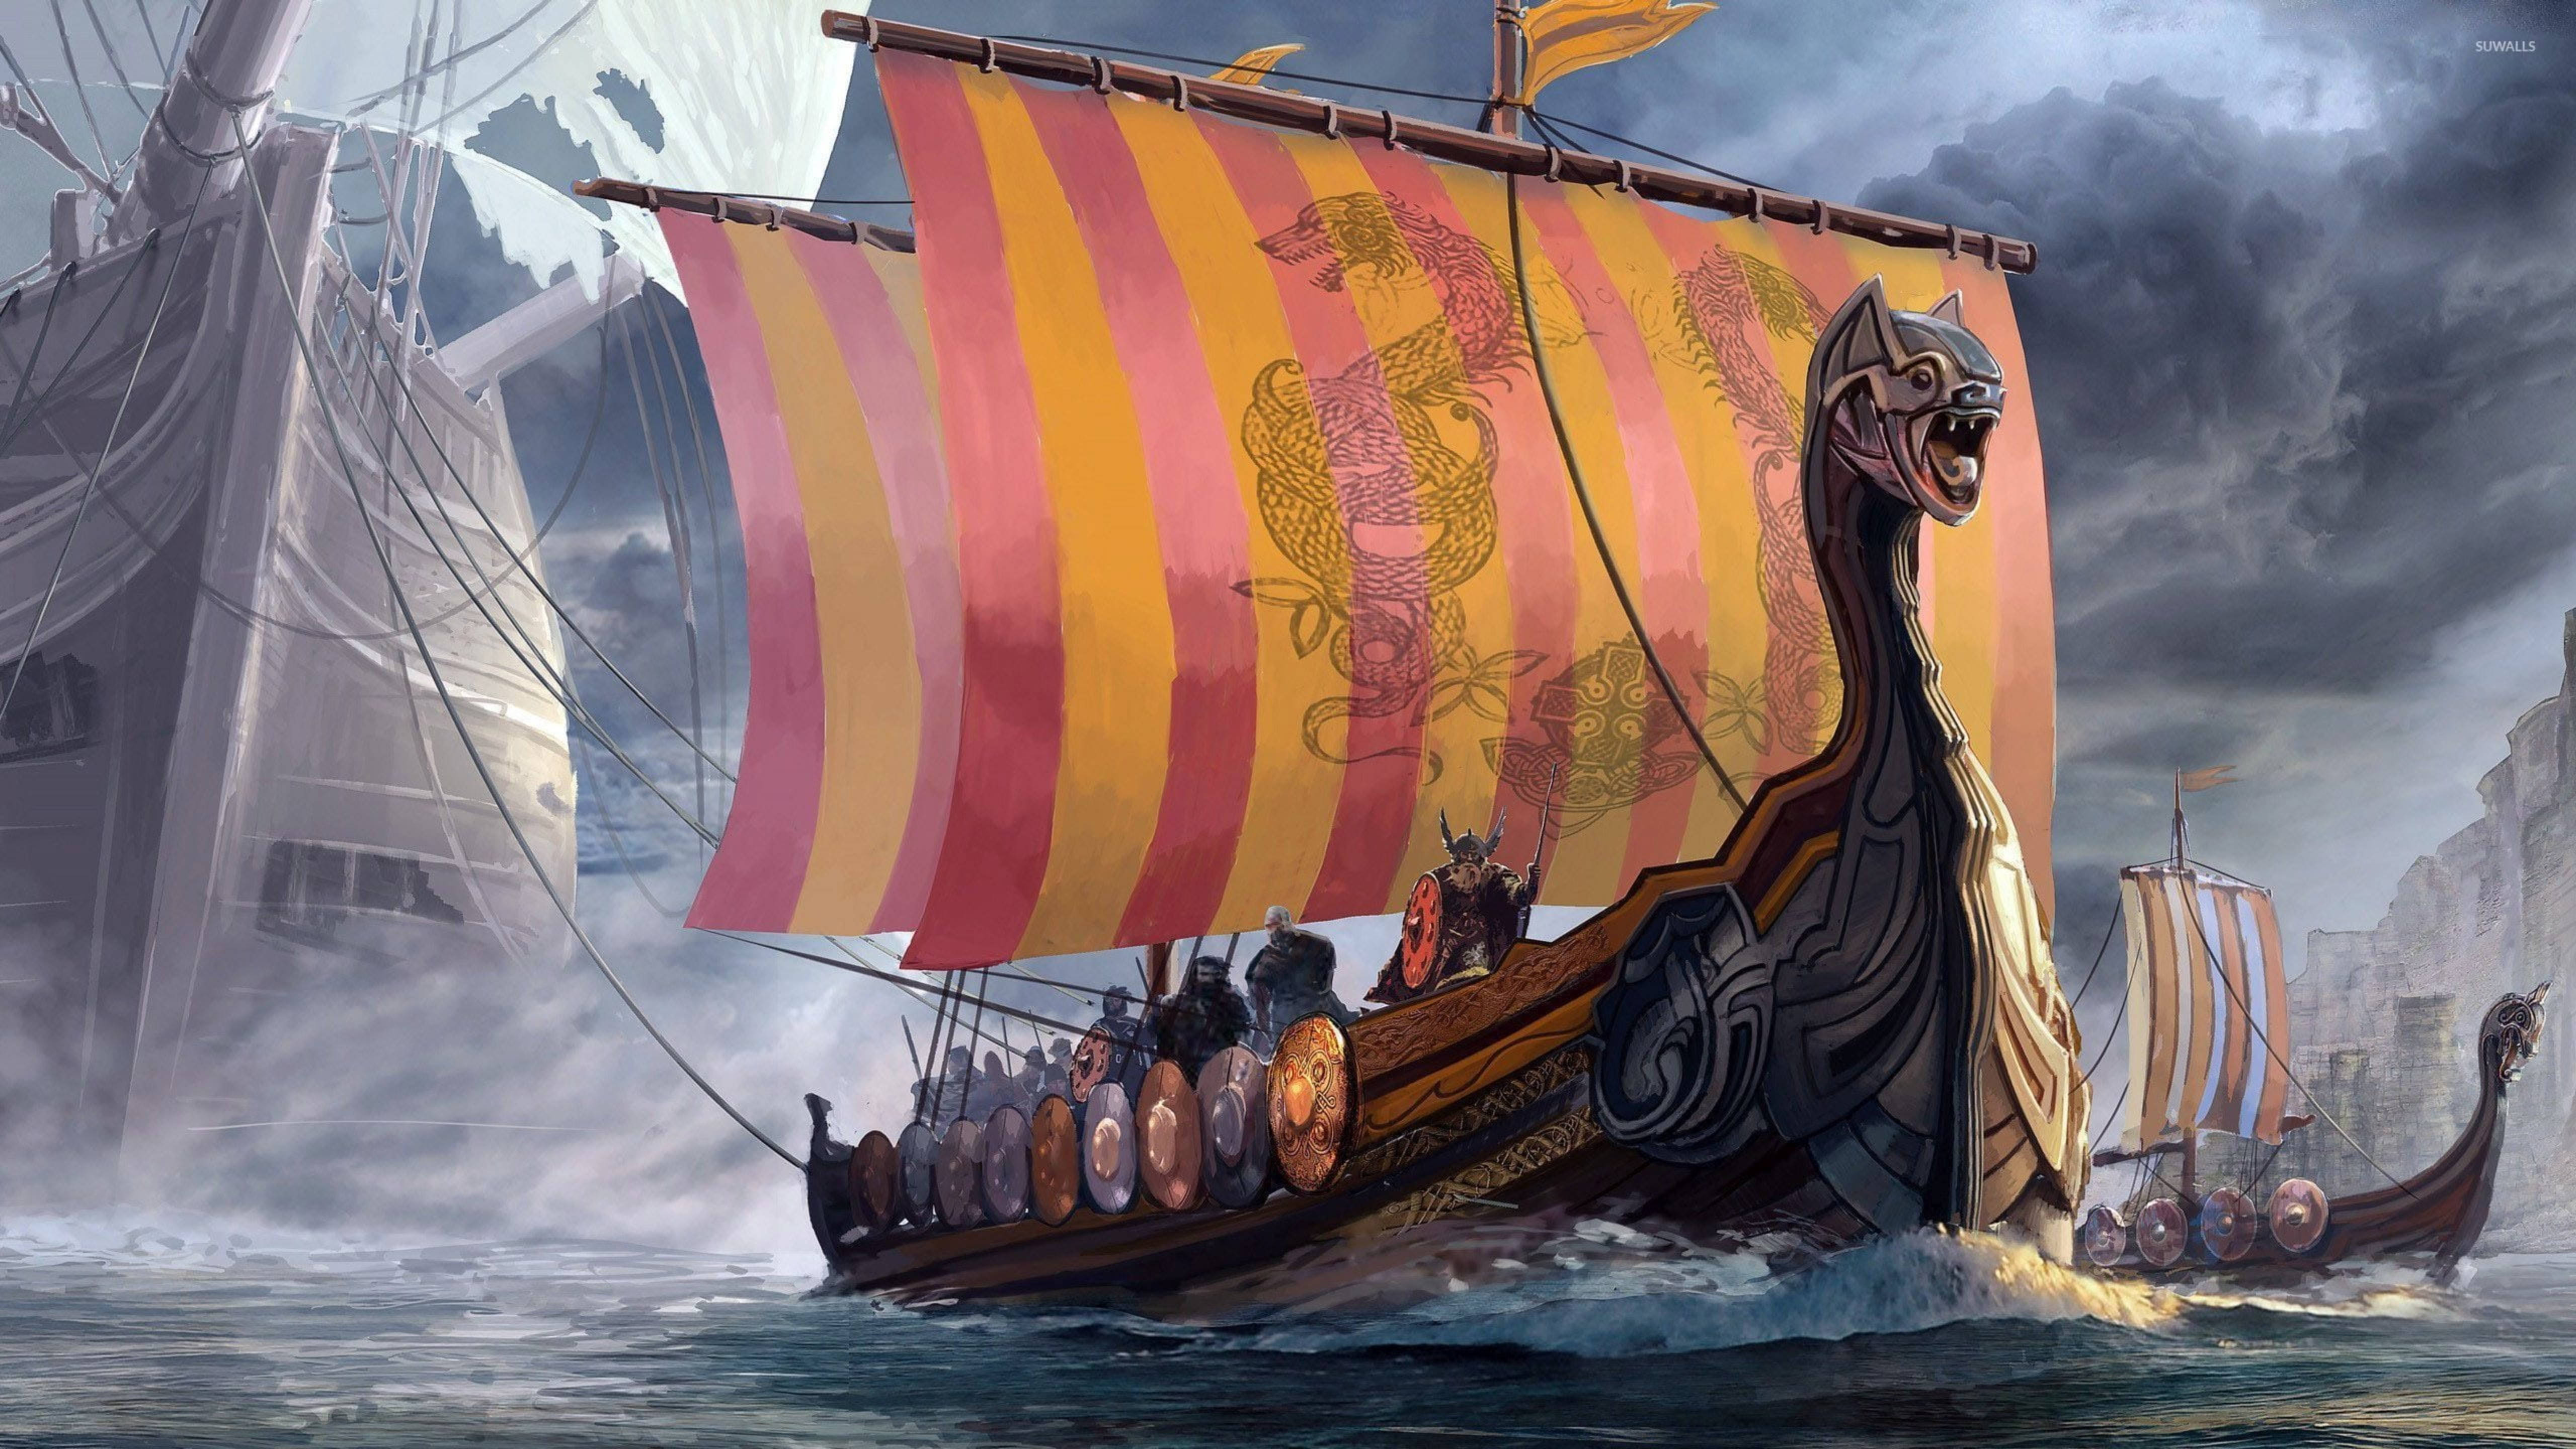 Download Knarr Viking Ship Wallpaper